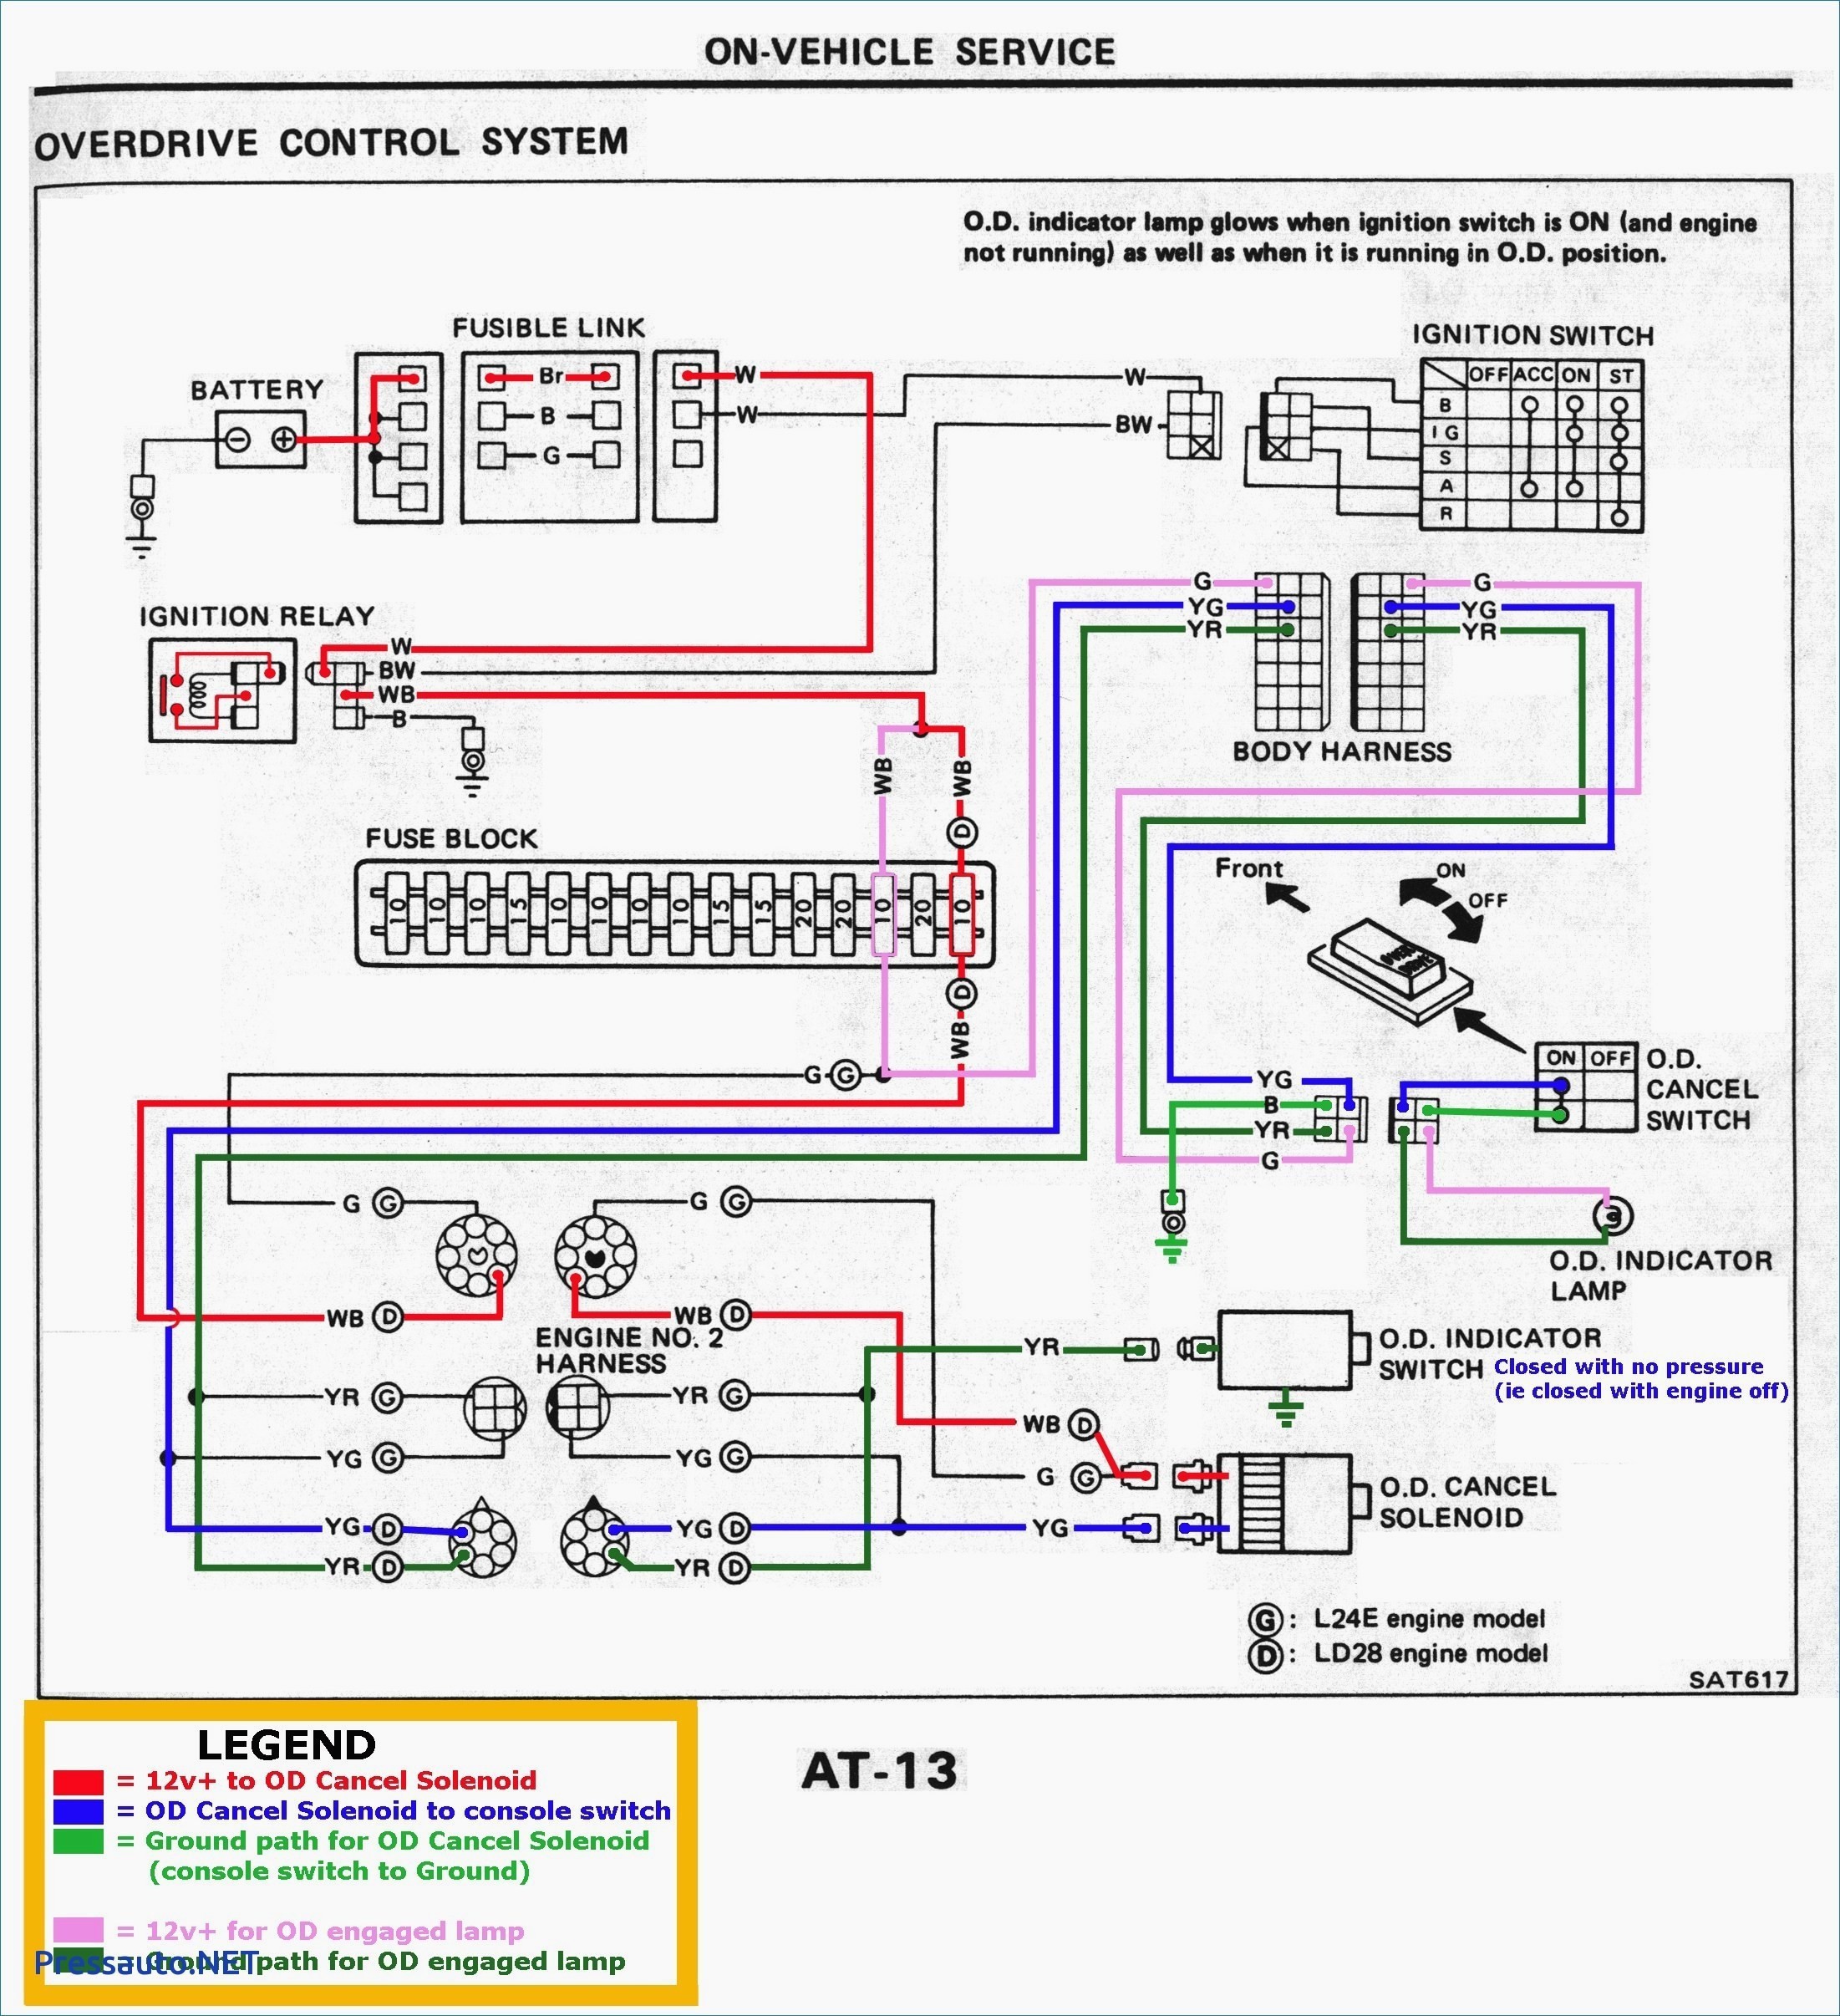 1996 Nissan Maxima Engine Diagram 2010 Nissan Sentra Engine Diagram Wiring Diagram Datasource Of 1996 Nissan Maxima Engine Diagram